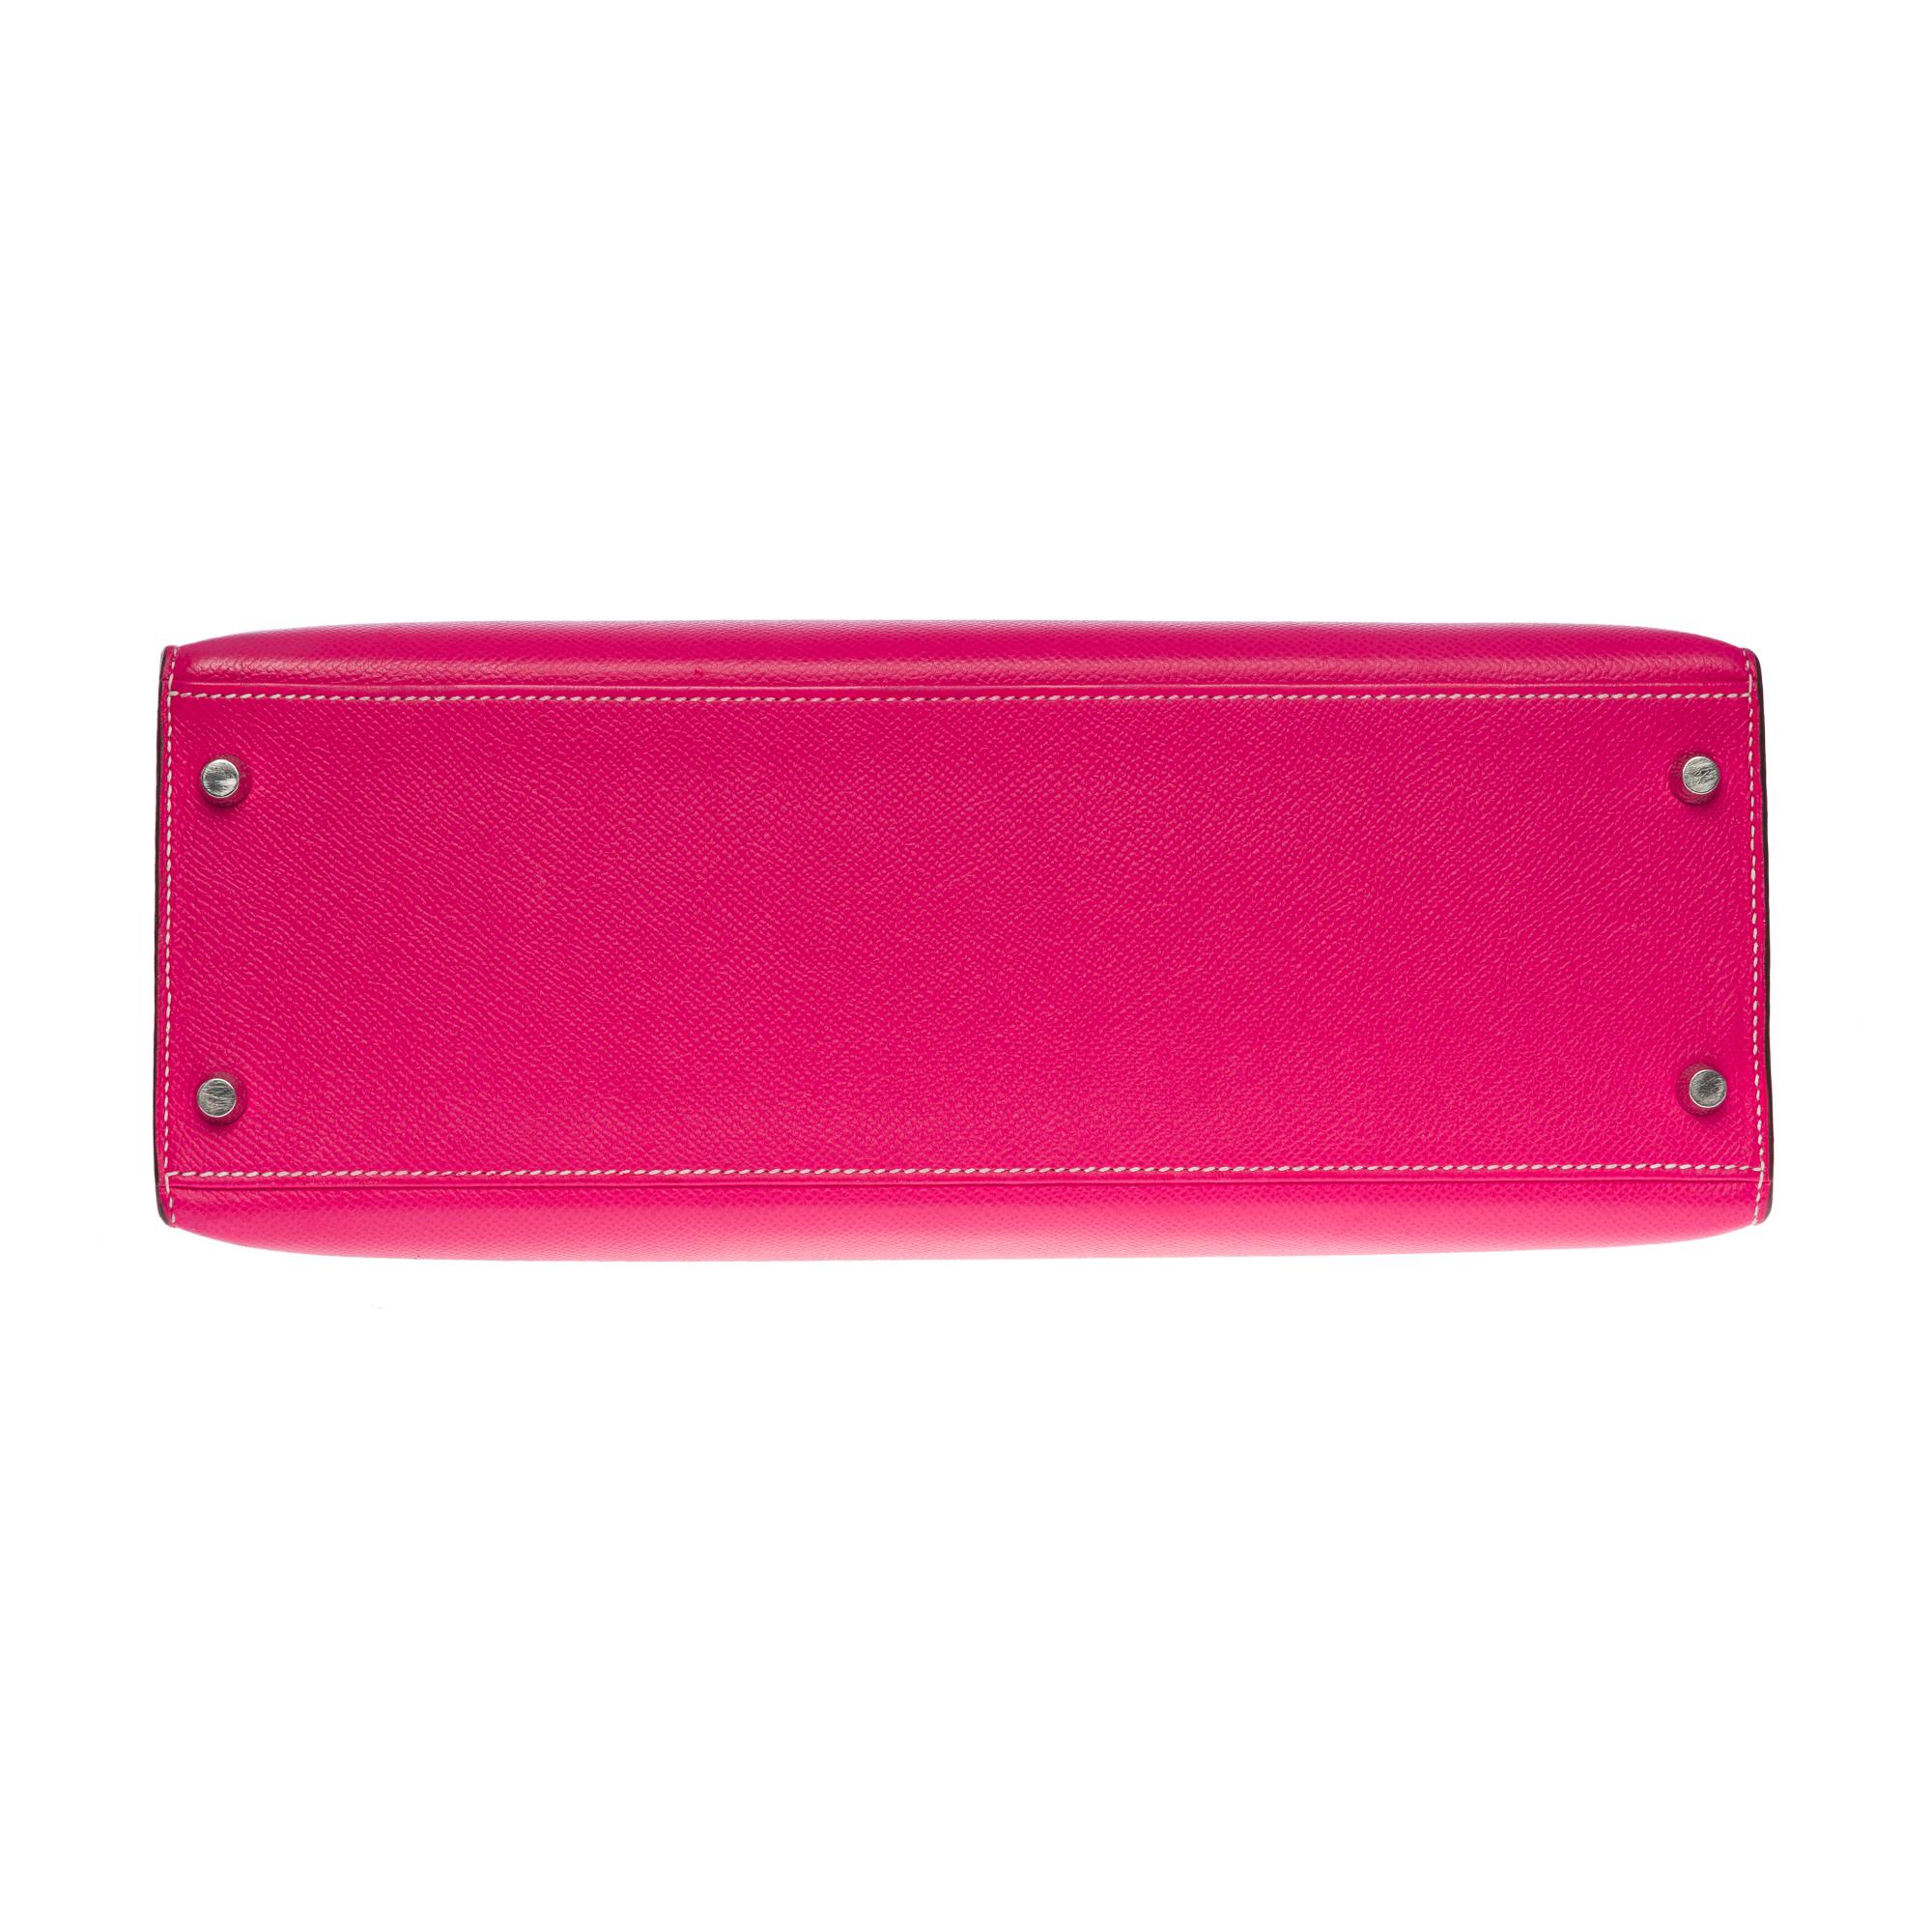 Hermès Kelly 32 sellier handbag strap (HSS) in Pink & purple Epsom leather, SHW 5